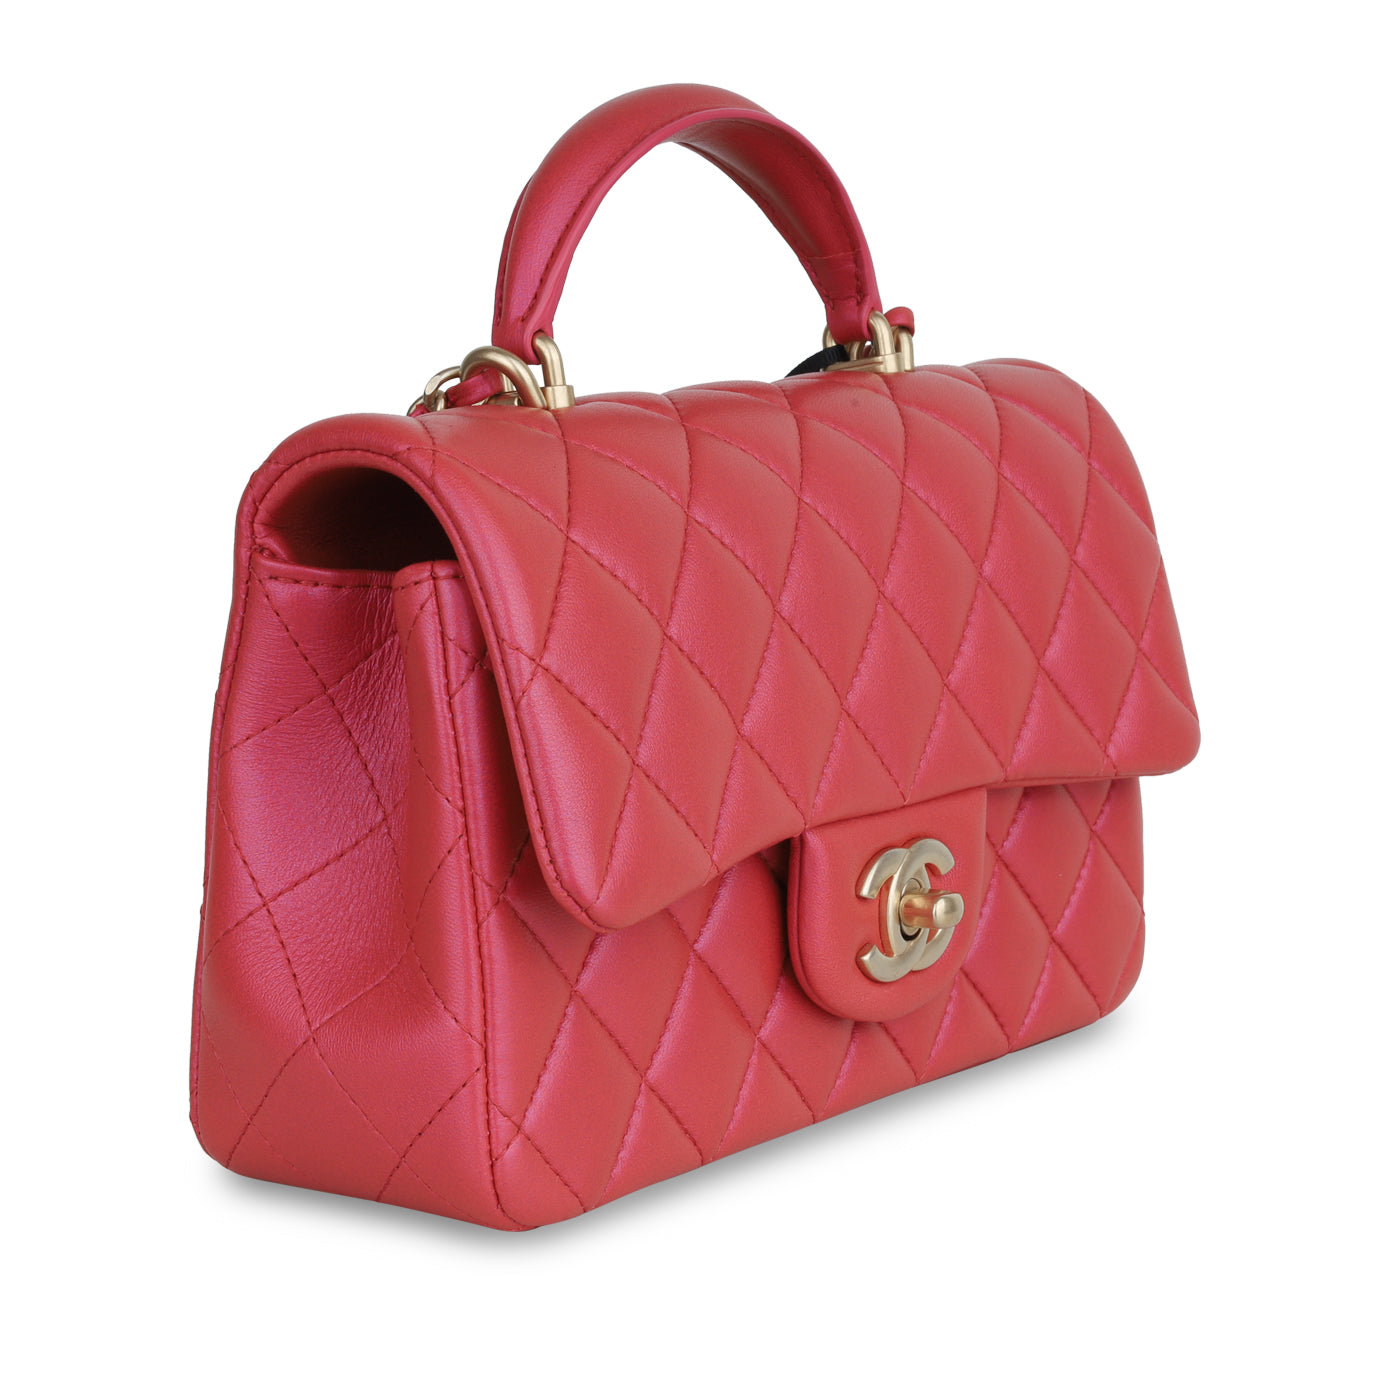 Chanel Mini Flap Bag - Shop on Pinterest